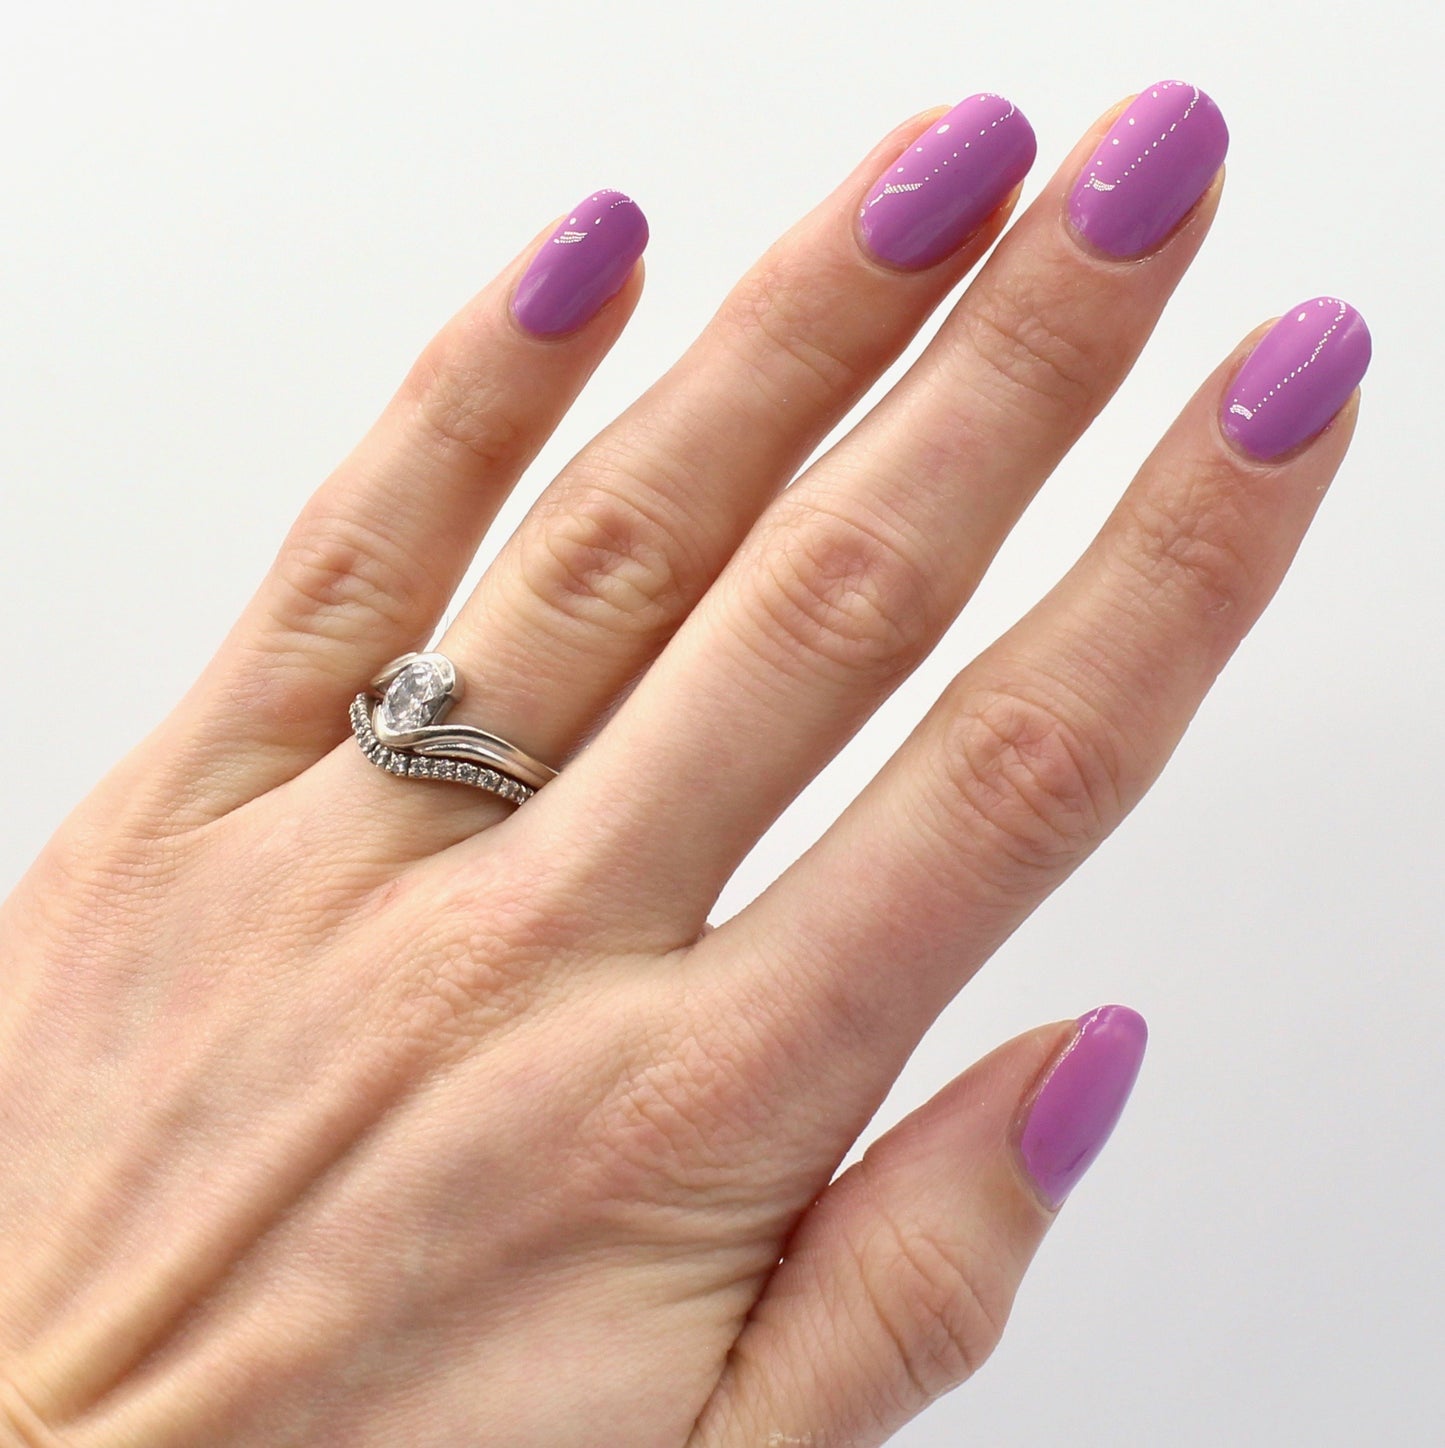 light purple nail polish swatch on pale skin tone